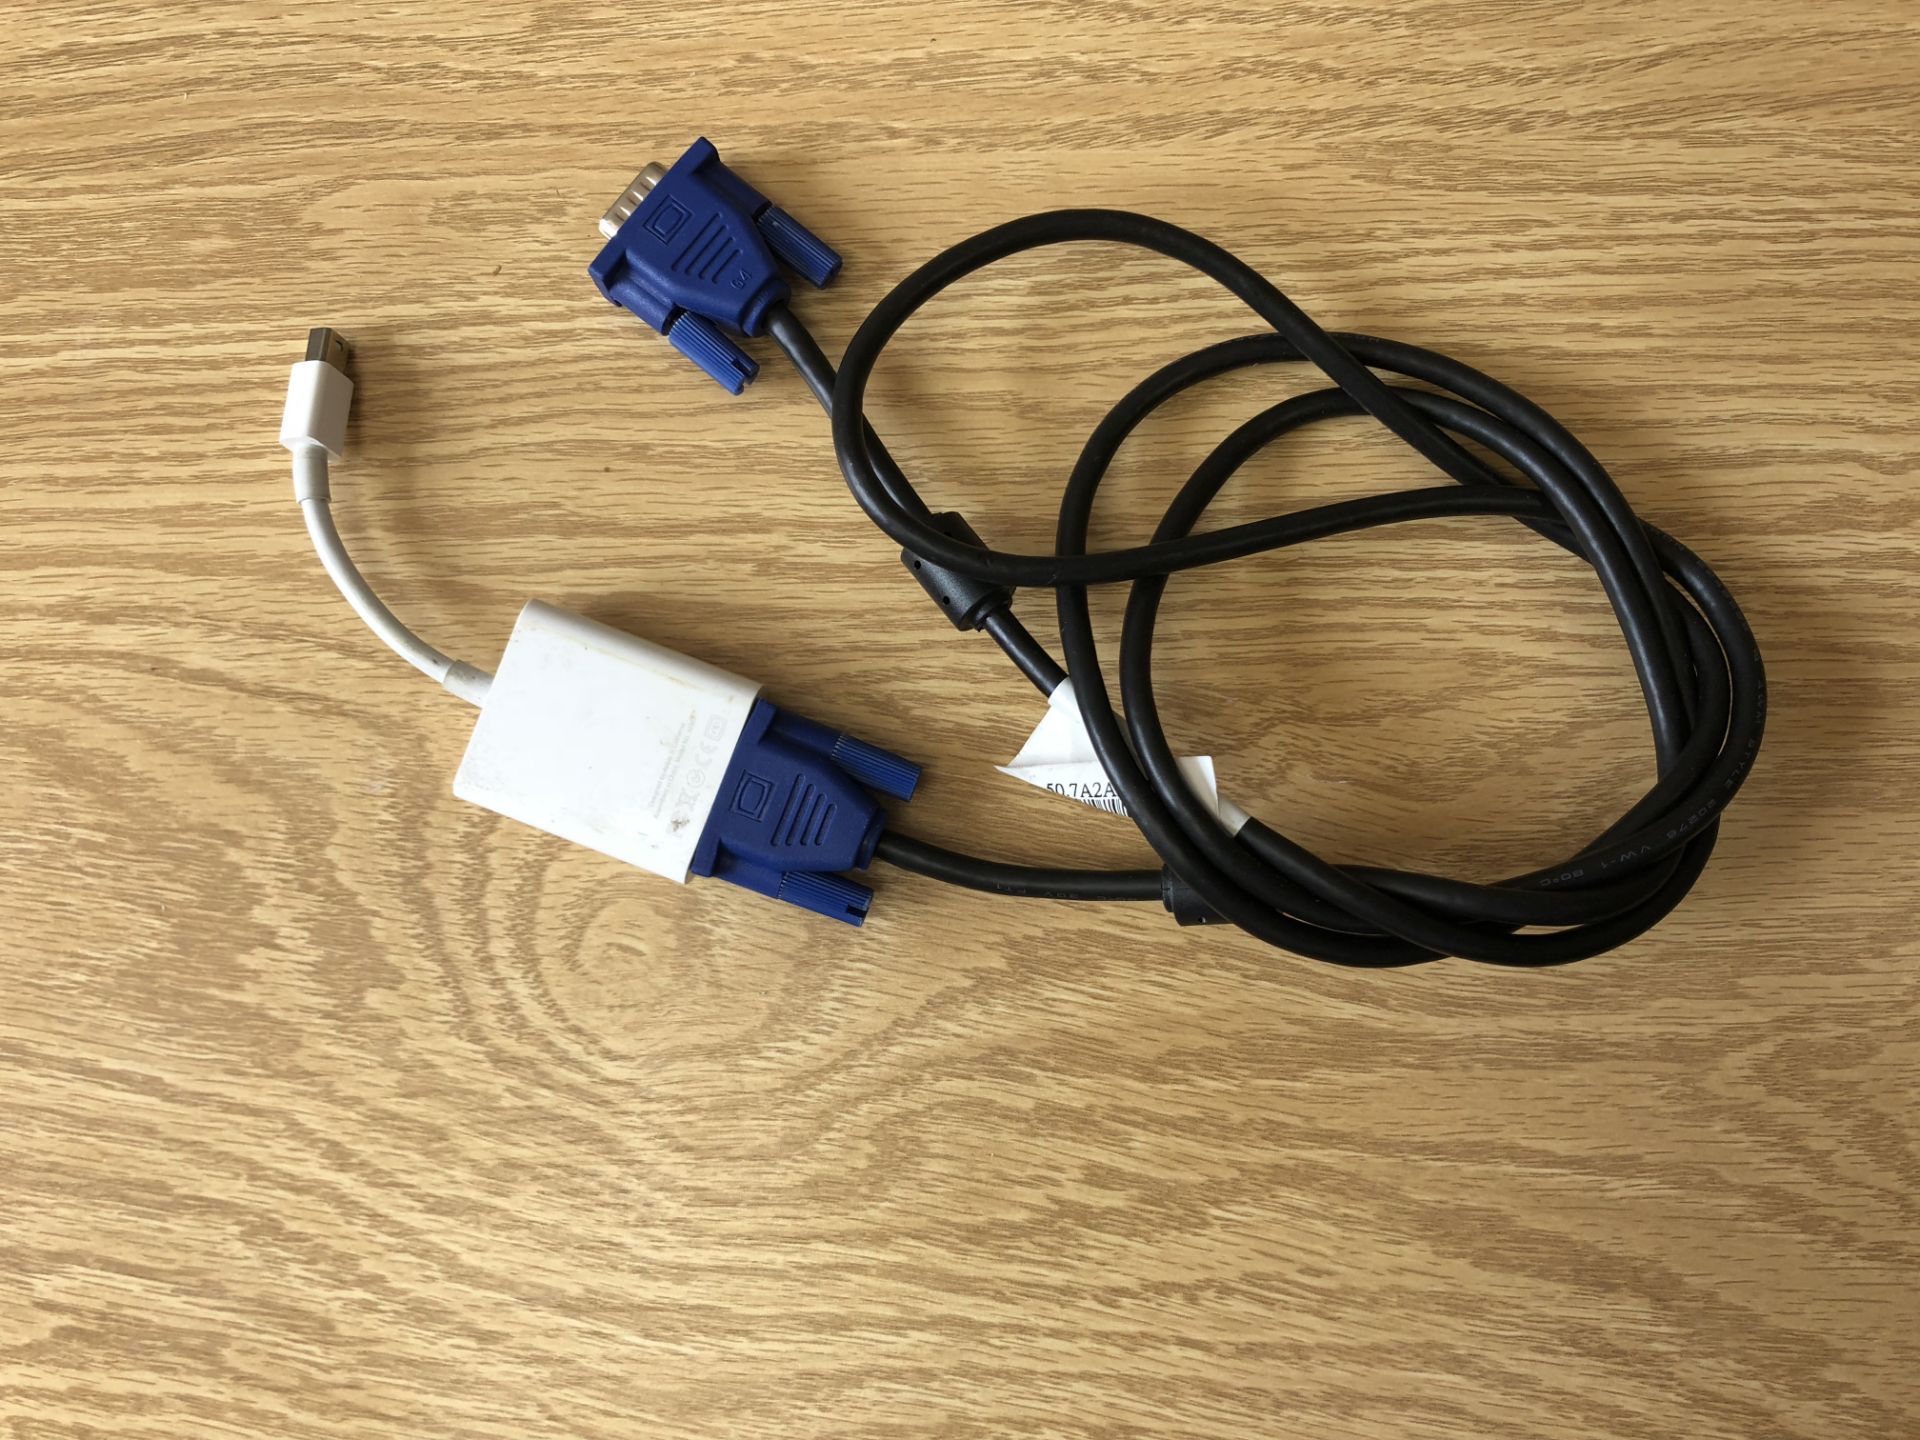 Apple Display Port to VGA Adapter, Model No. A1307